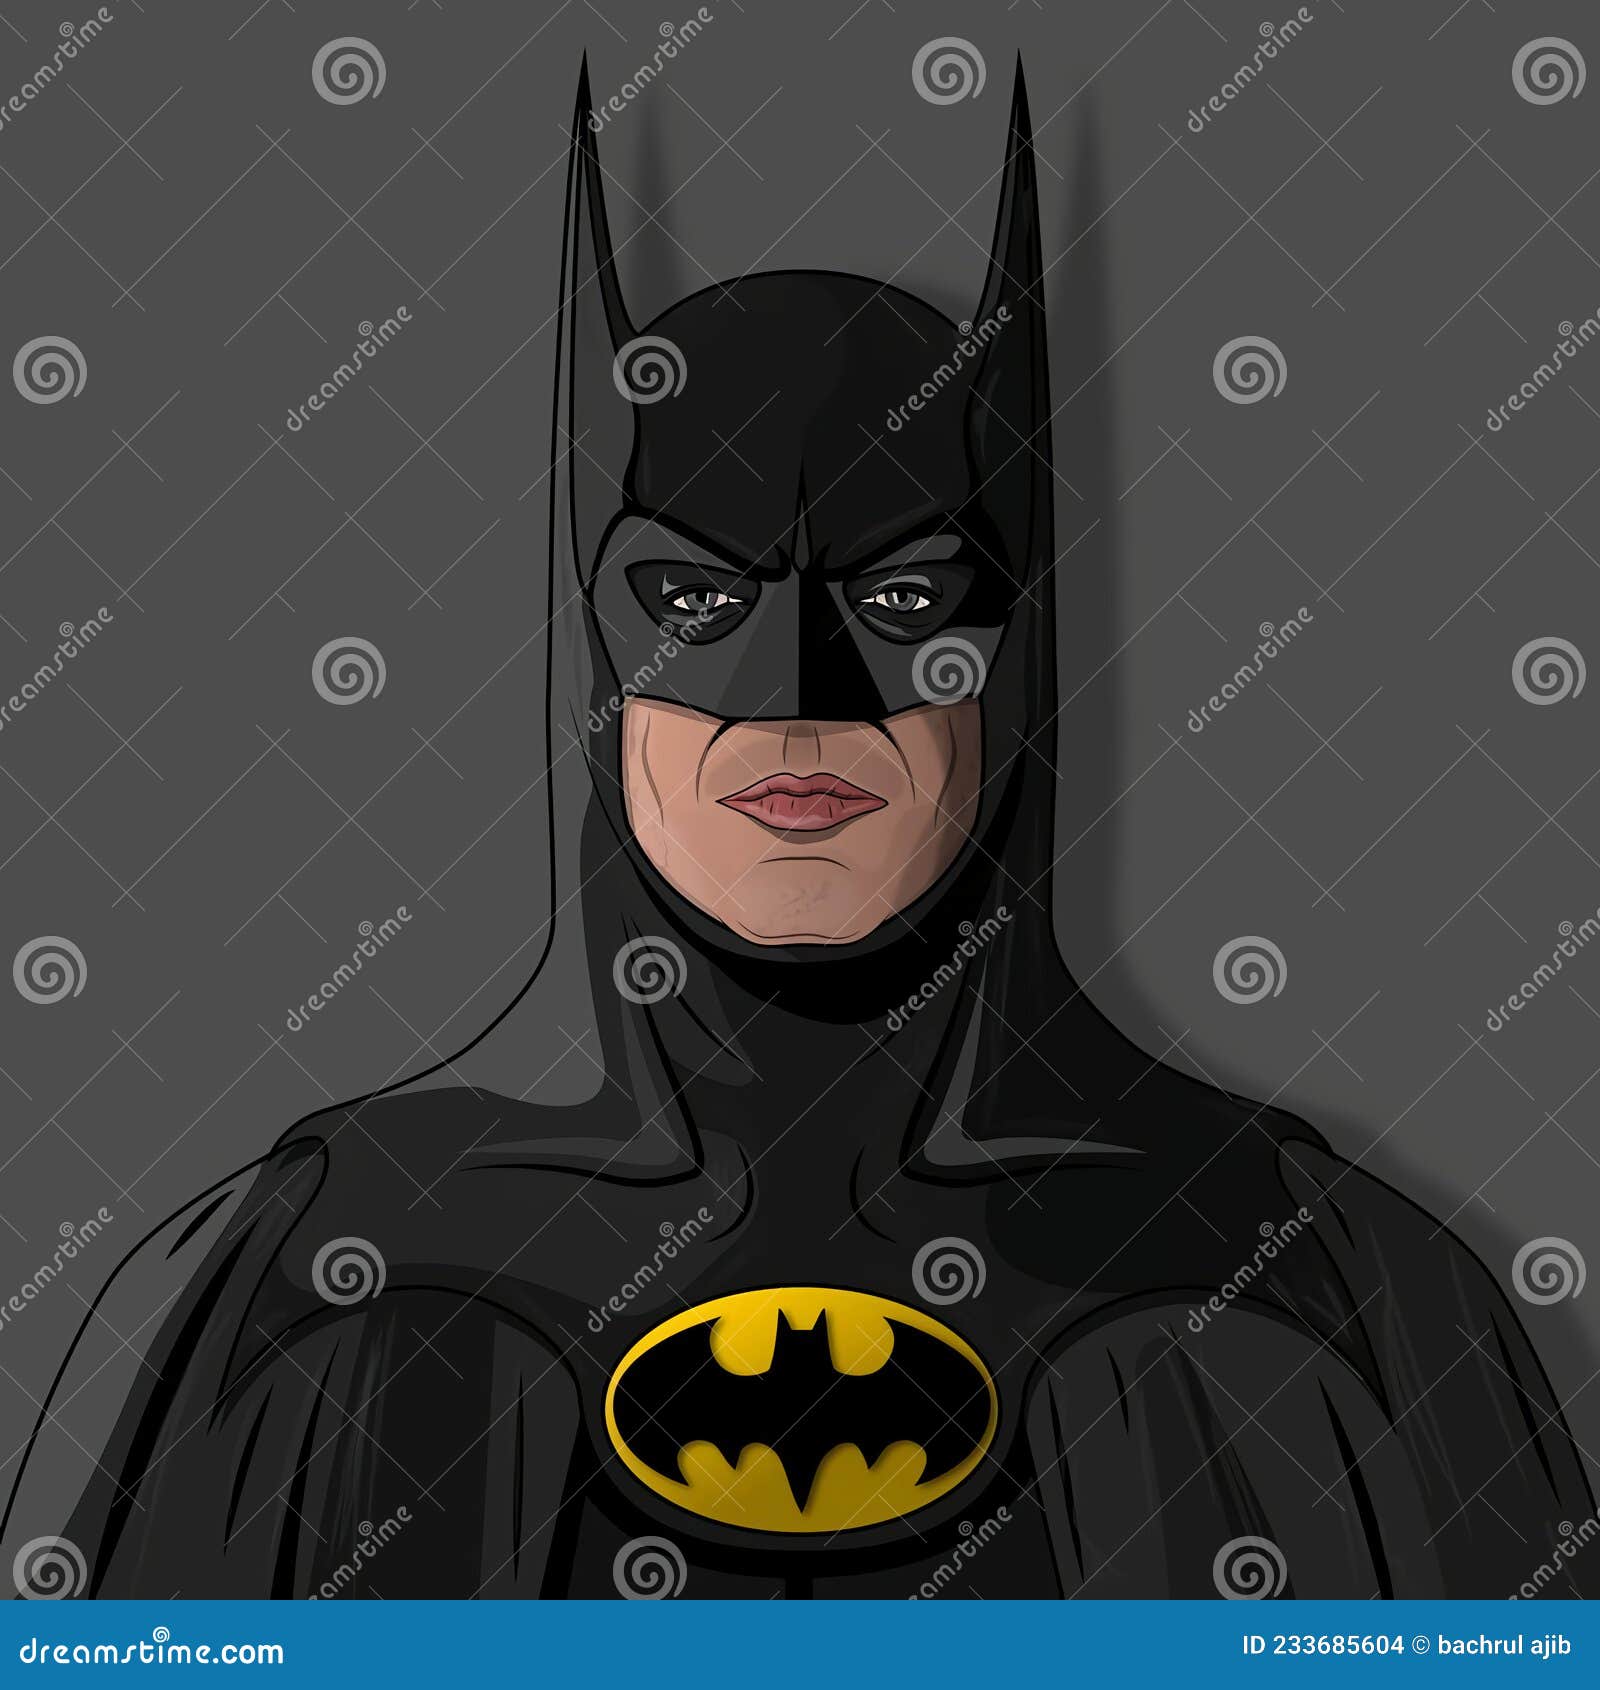 Batman face illustration editorial stock image. Illustration of costume -  233685604